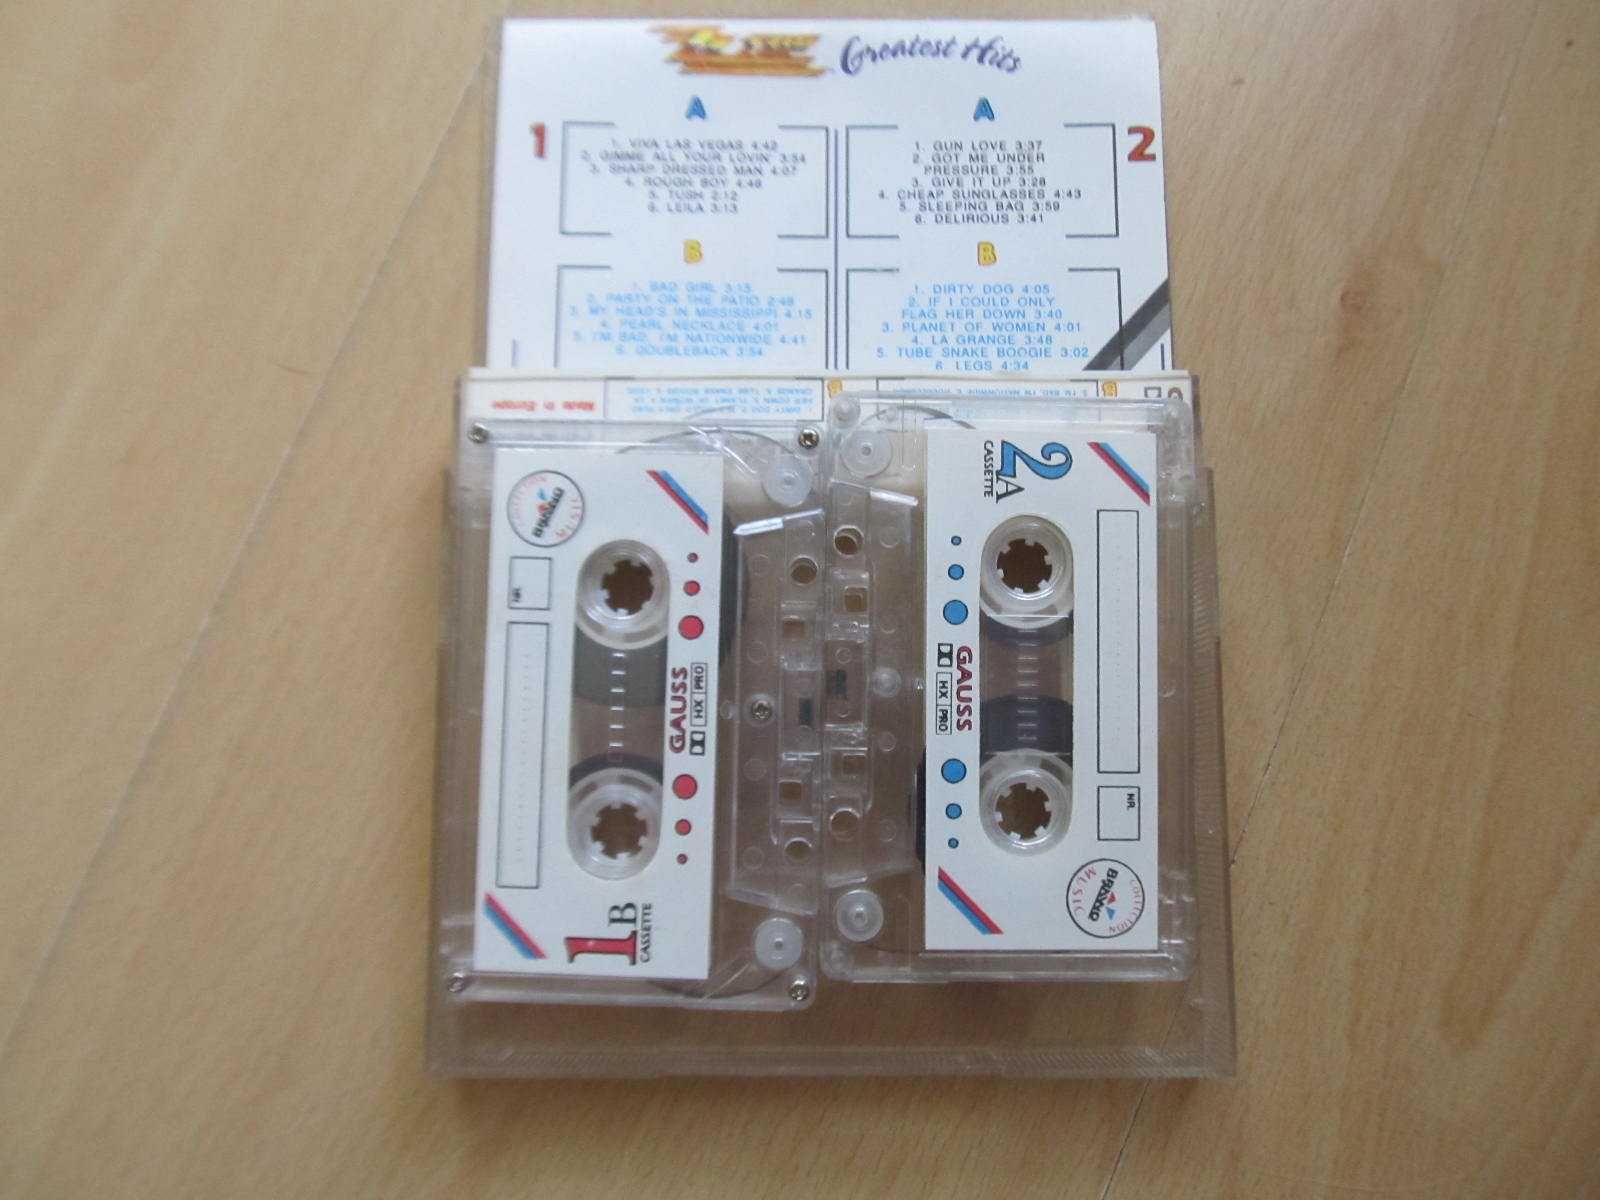 ZZ Top- Greatest Hits- kasety audio